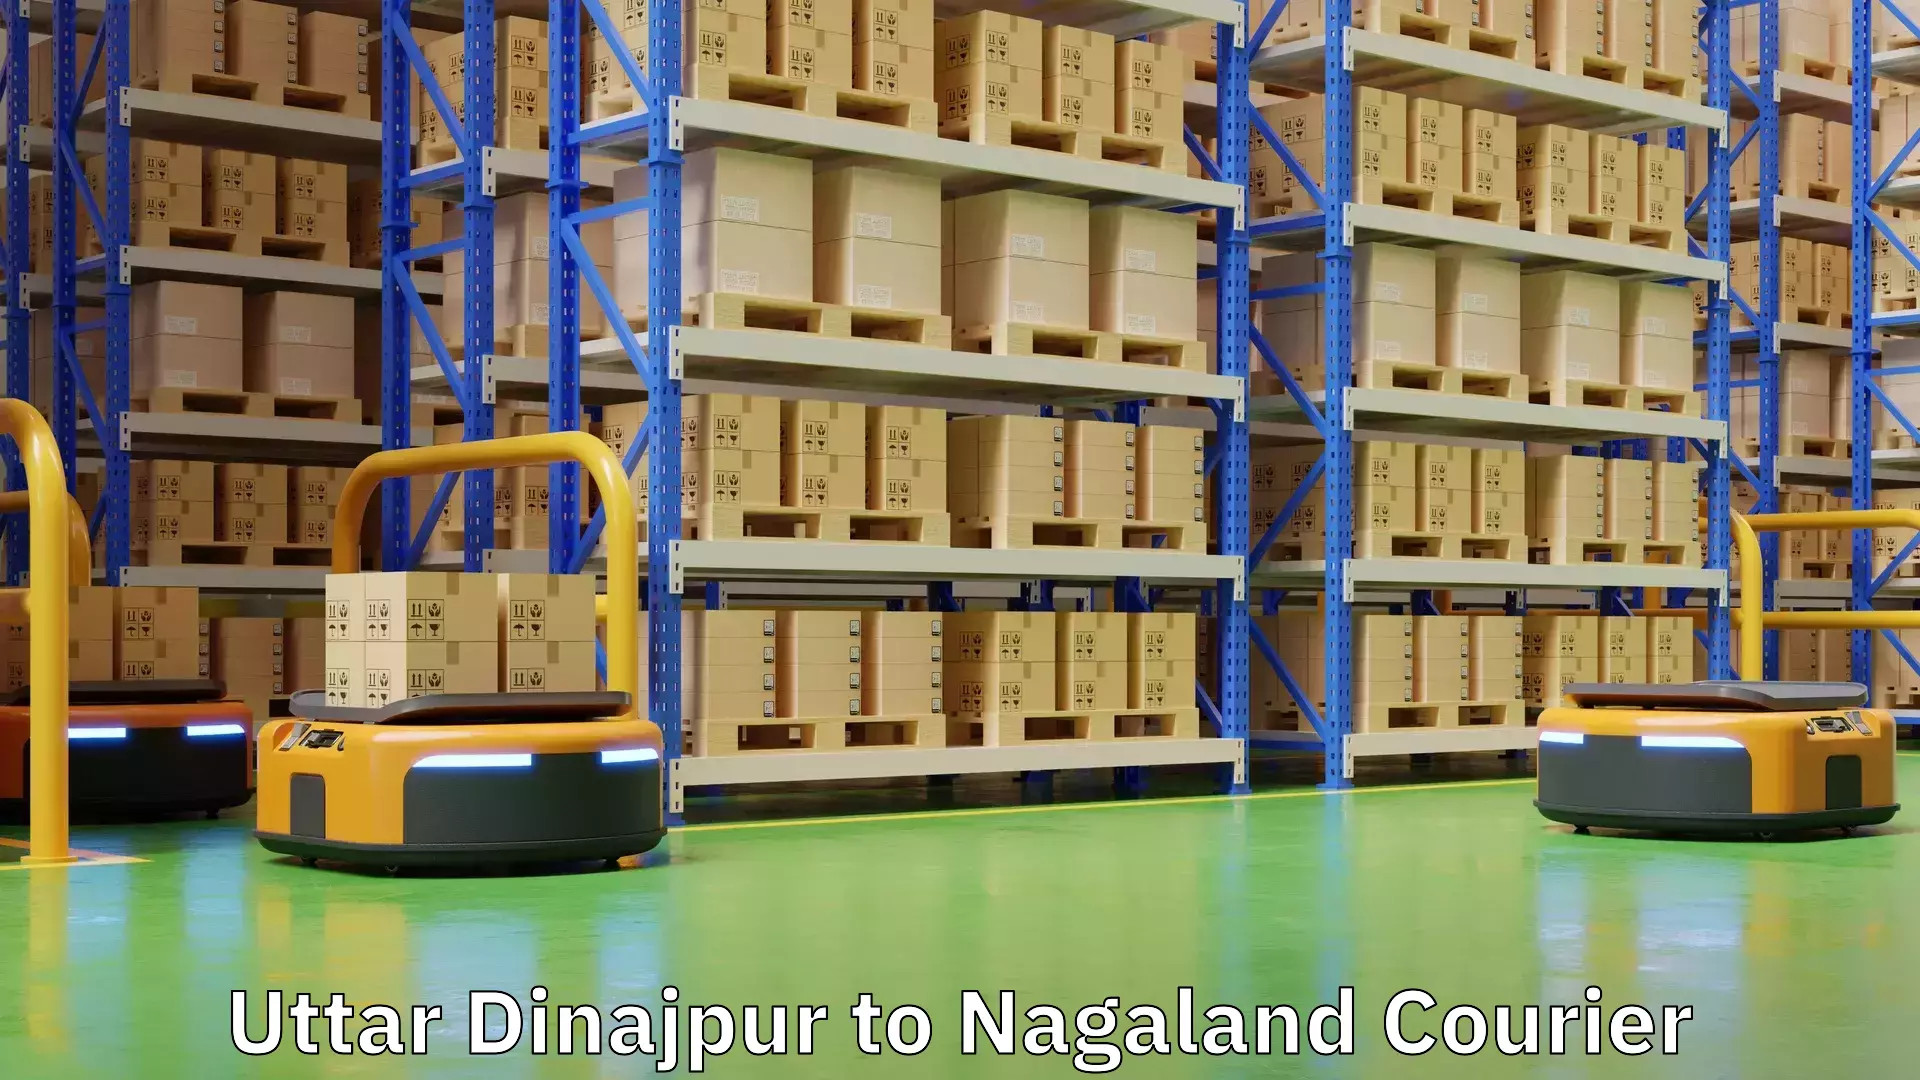 Advanced shipping technology Uttar Dinajpur to Nagaland